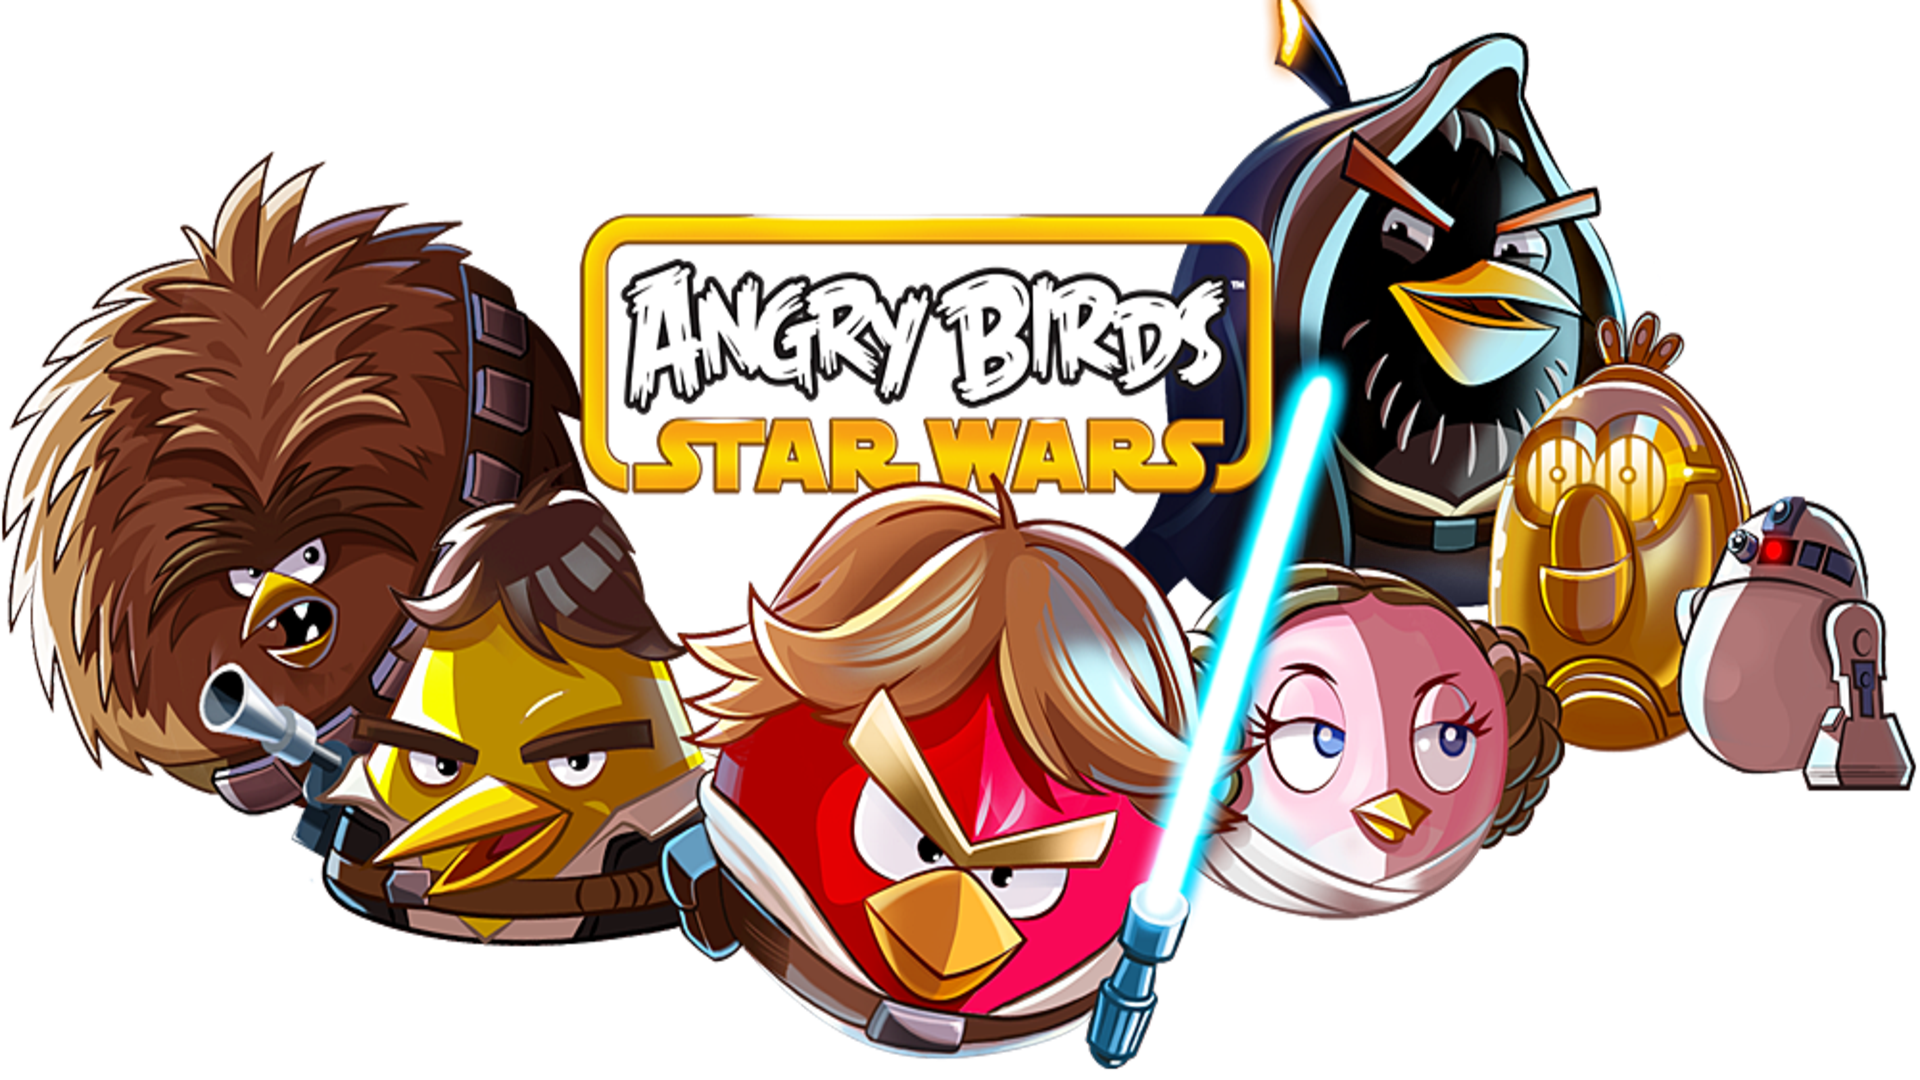 star wars wallpaper hd,cartoon,animated cartoon,fictional character,games,angry birds